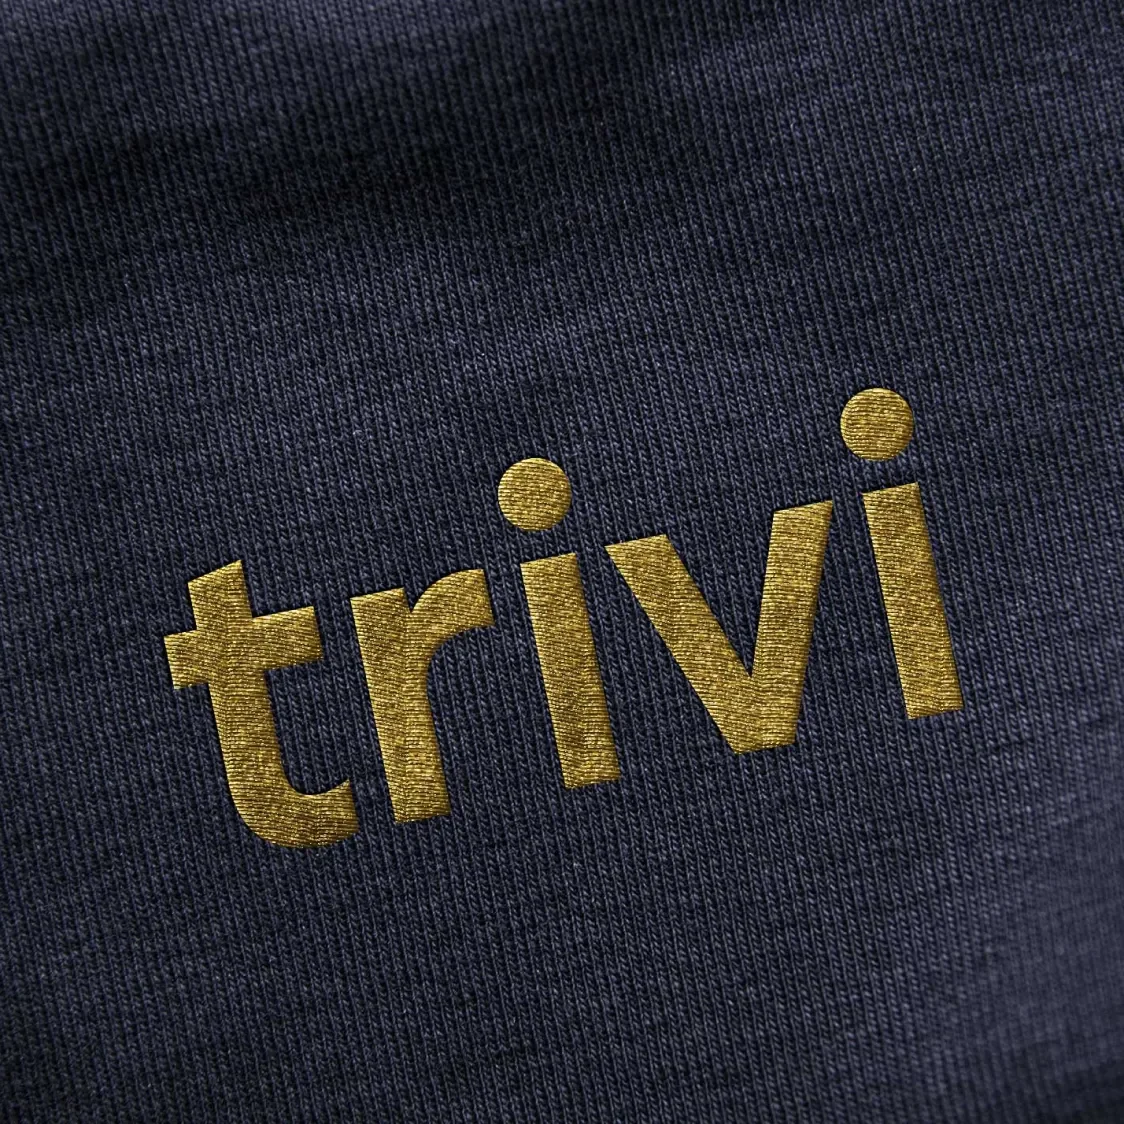 Gold Trivi logo embroidered on dark blue cloth